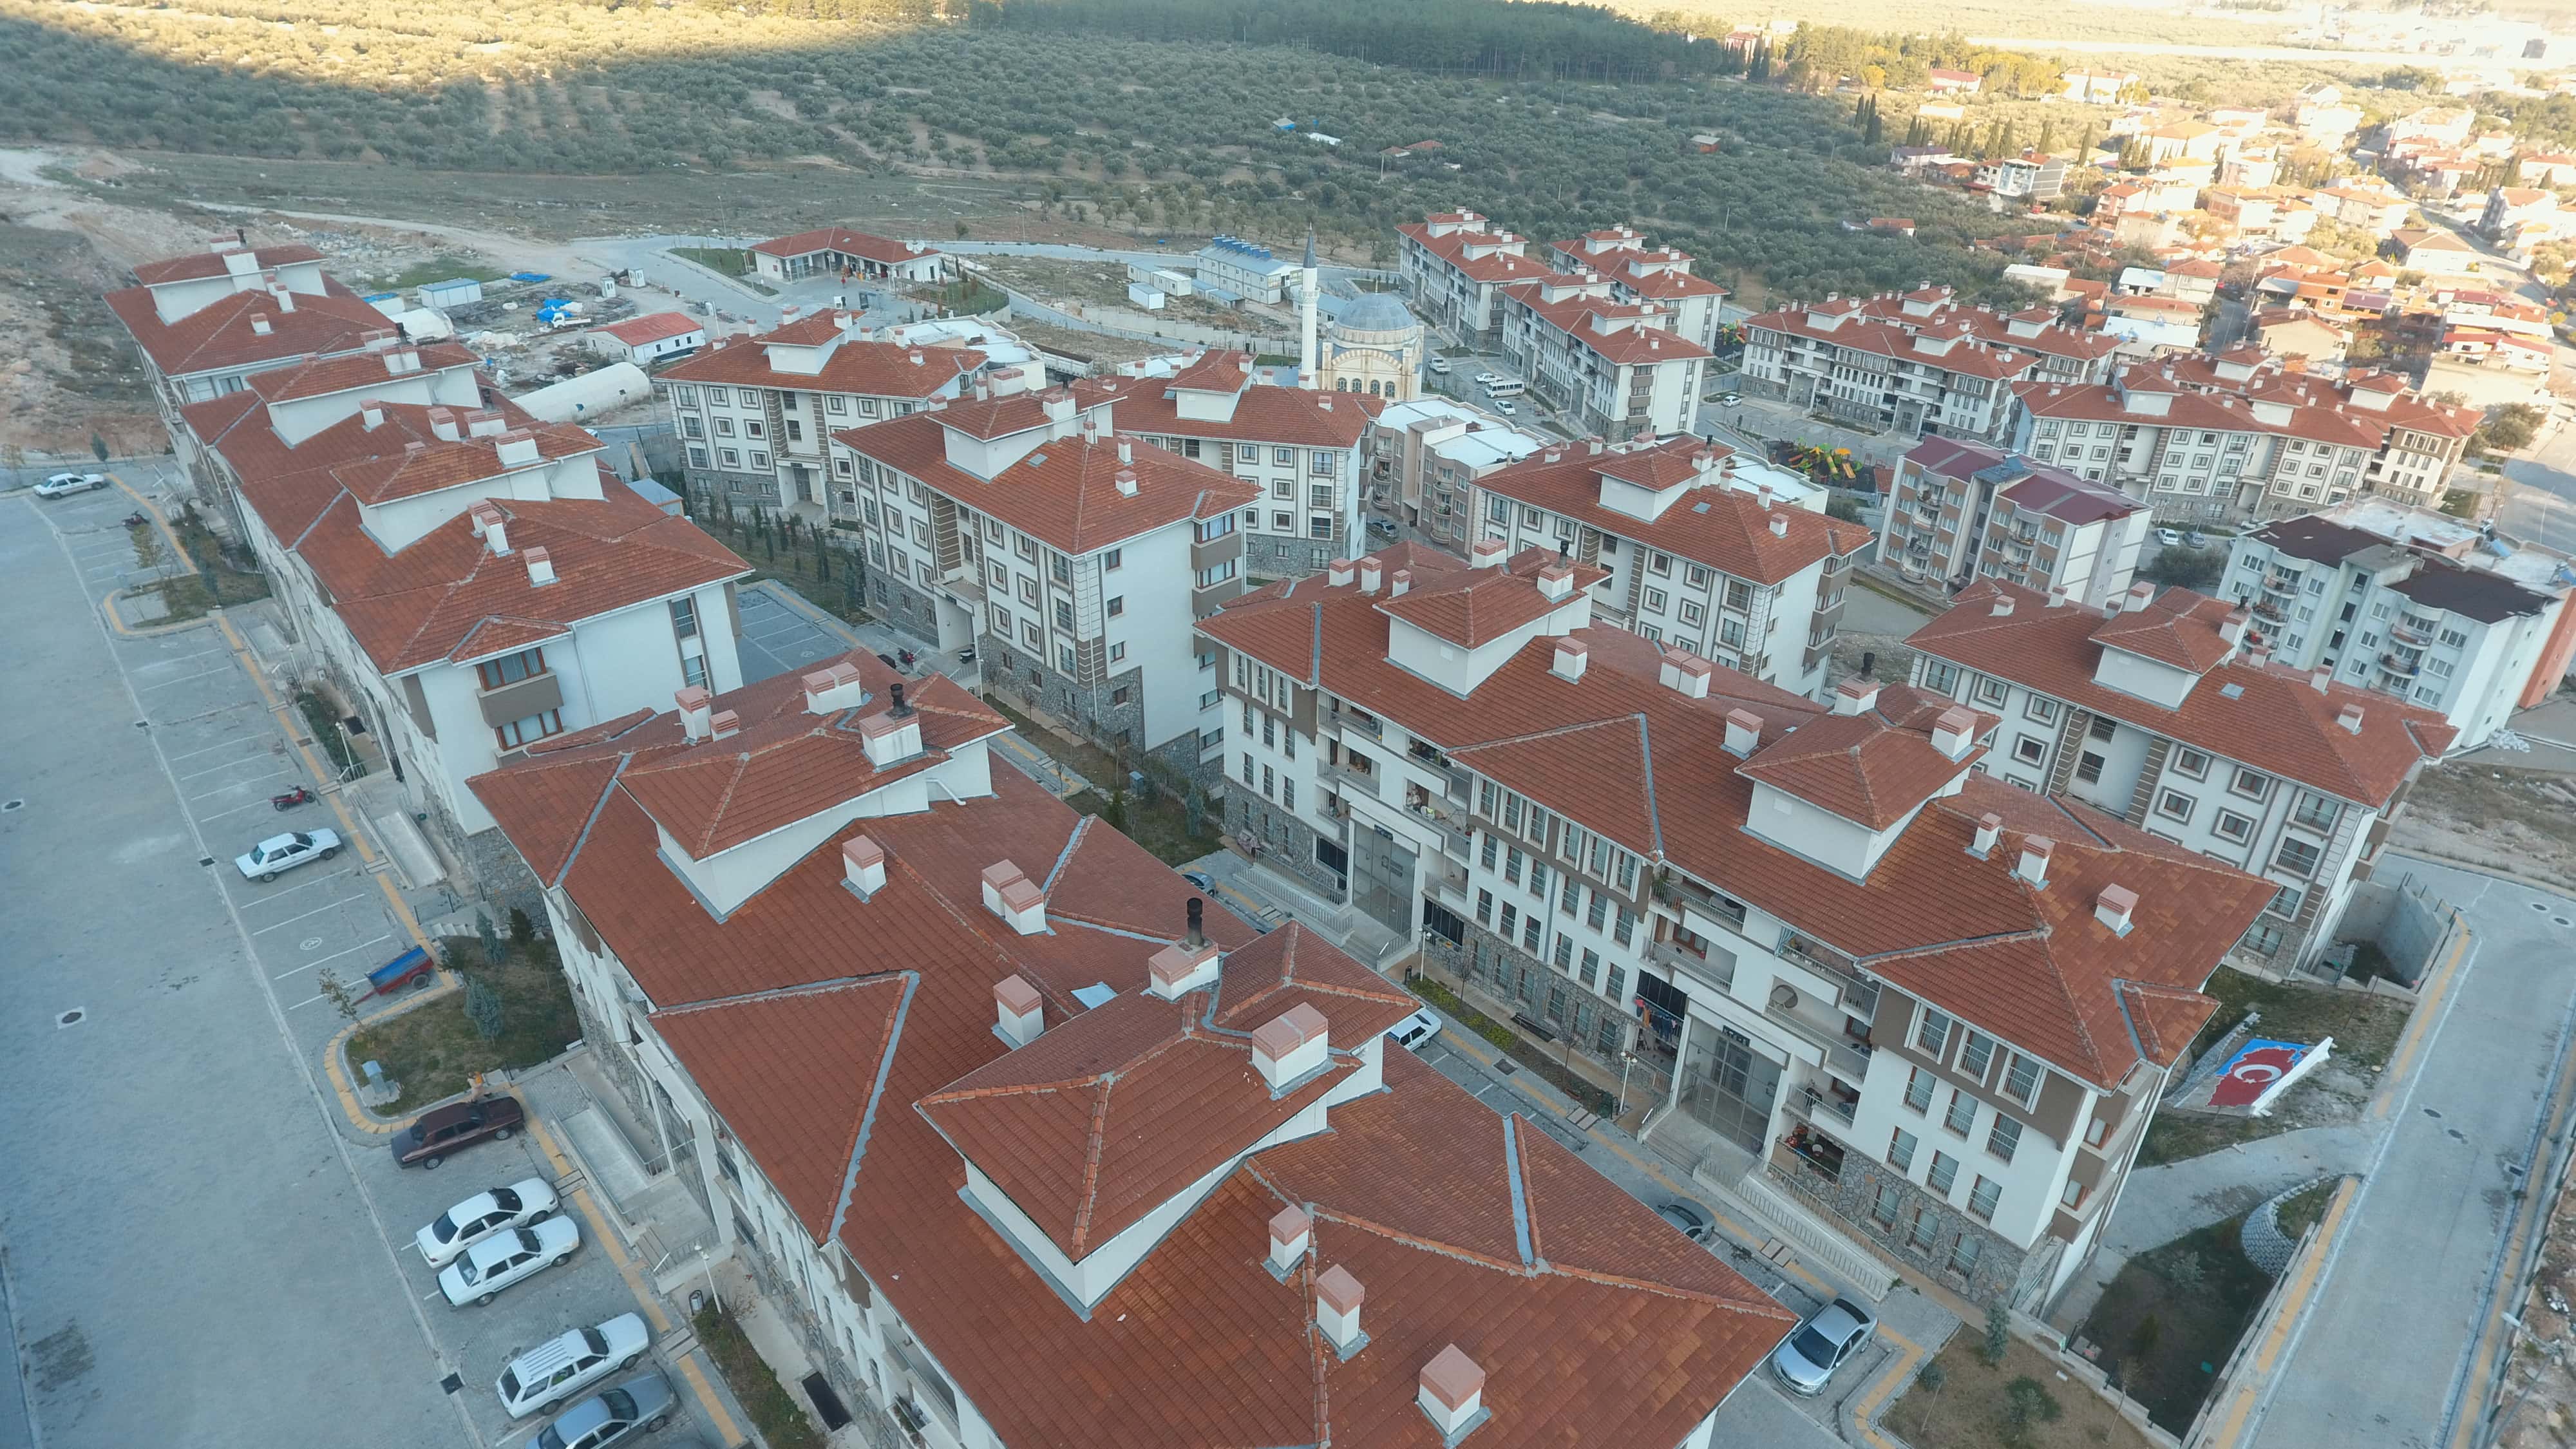 KIRKAĞAÇ - MANİSA MASS HOUSING CONSTRUCTION